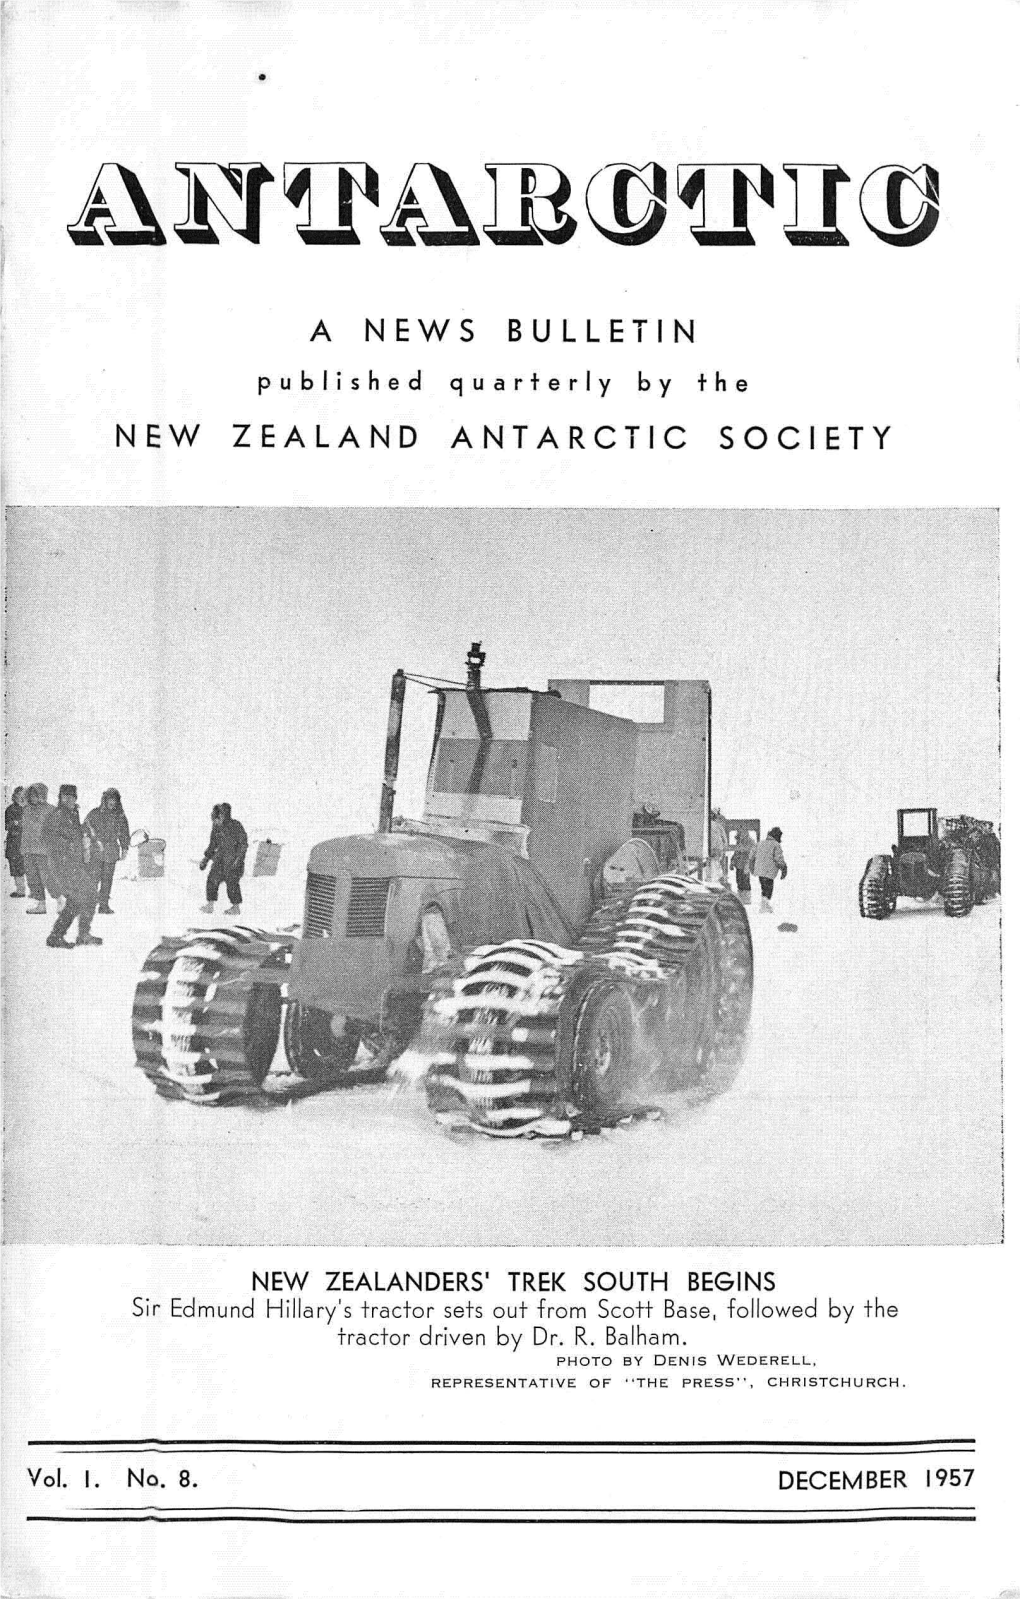 A News Bulletin New Zealand Antarctic Society